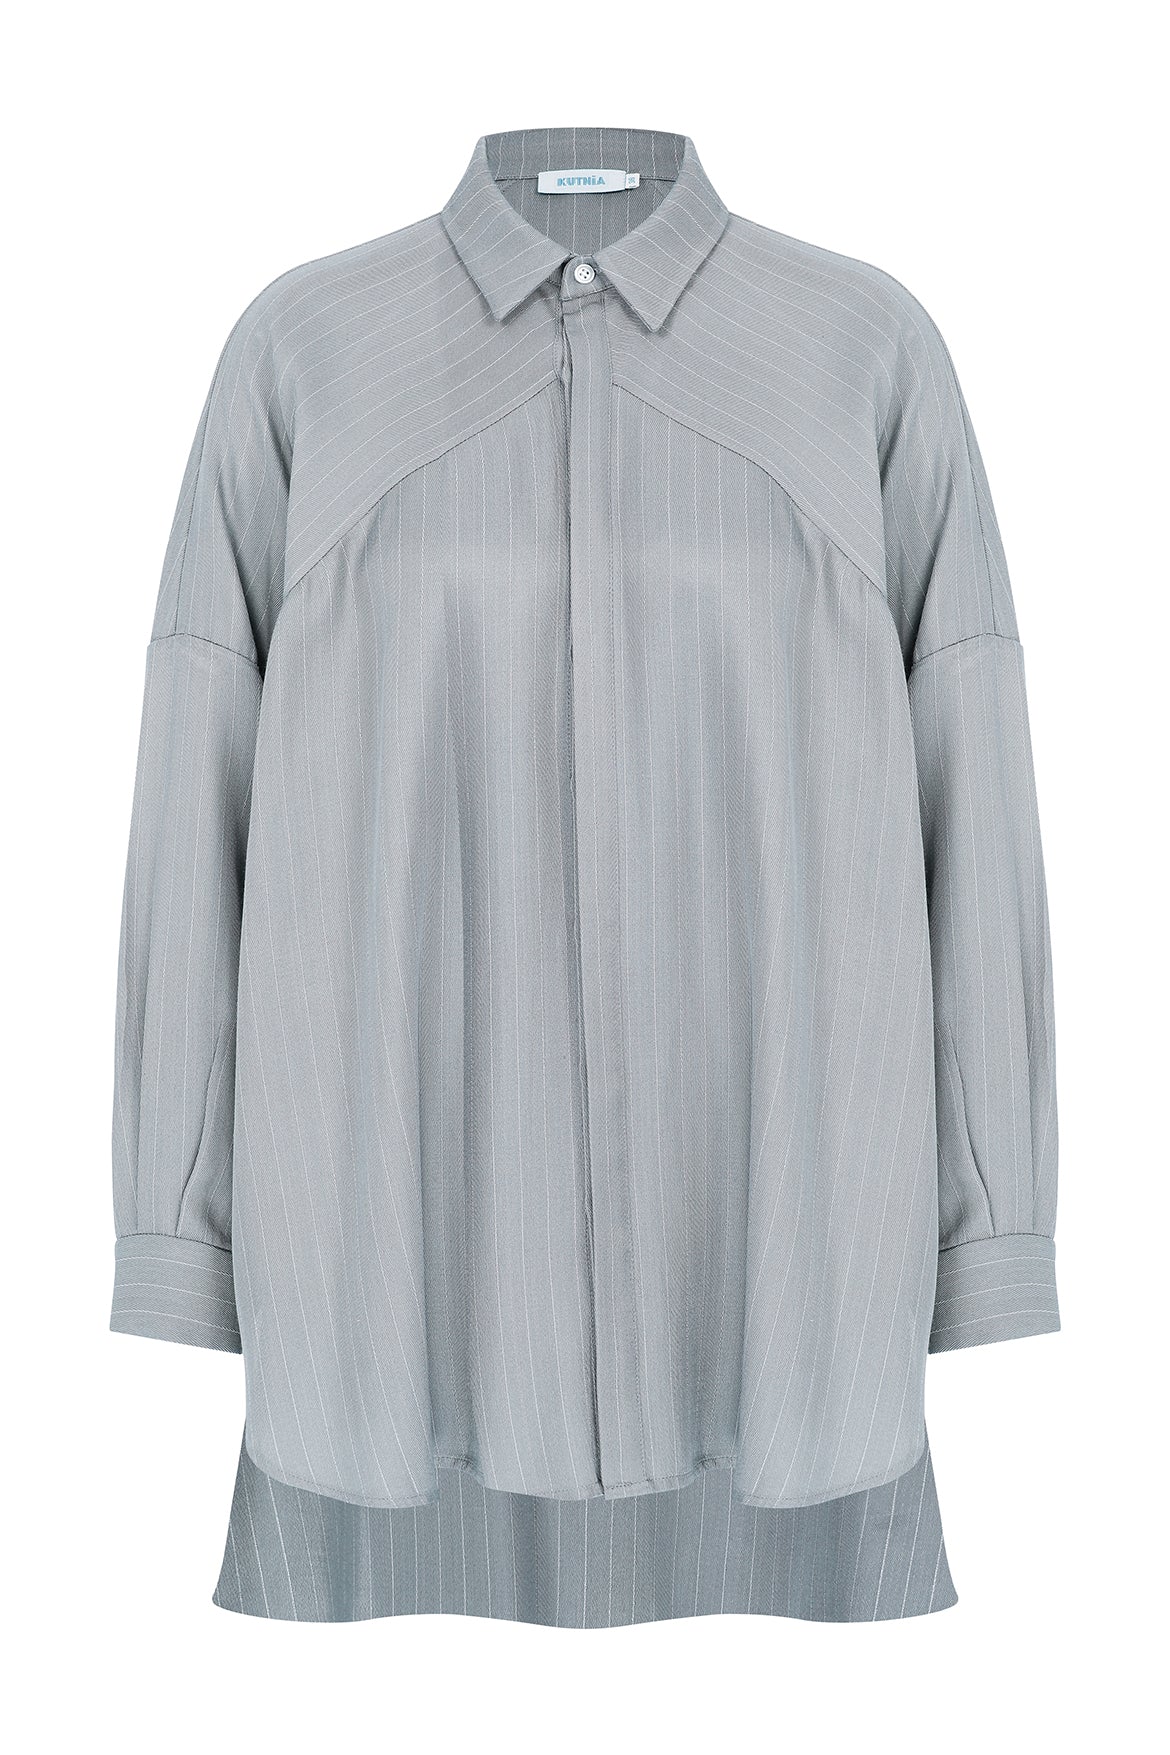 Off Shoulder Gray Striped Kutnu Shirt